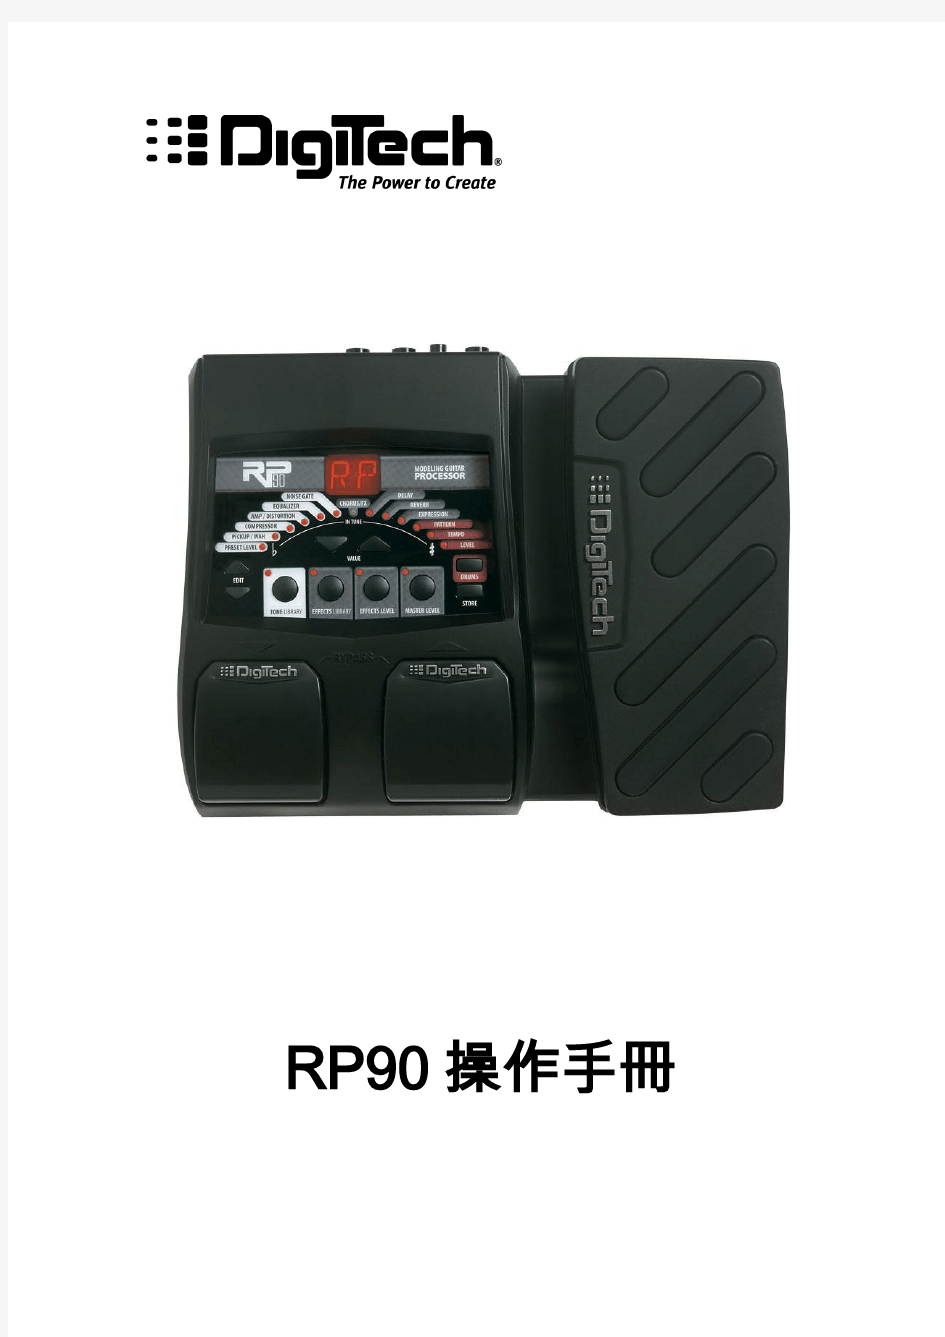 DigiTech-rp90效果器 中文说明书